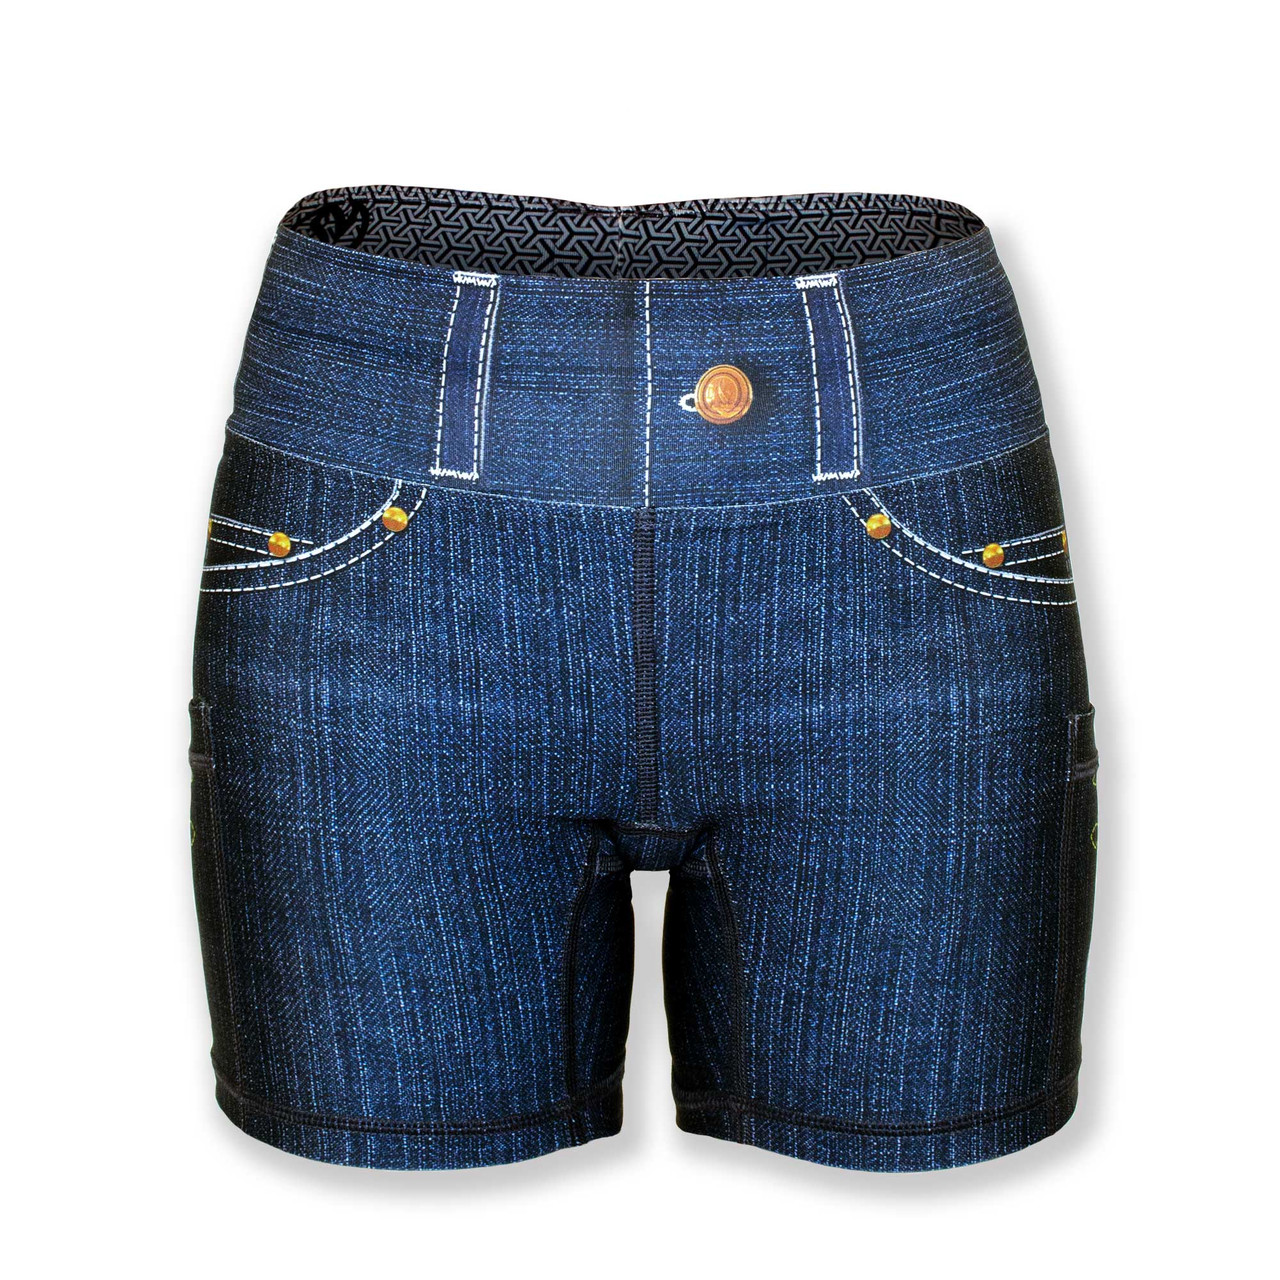 Chambord Embellished High Waist Hot Pant Shorts in Powder Blue